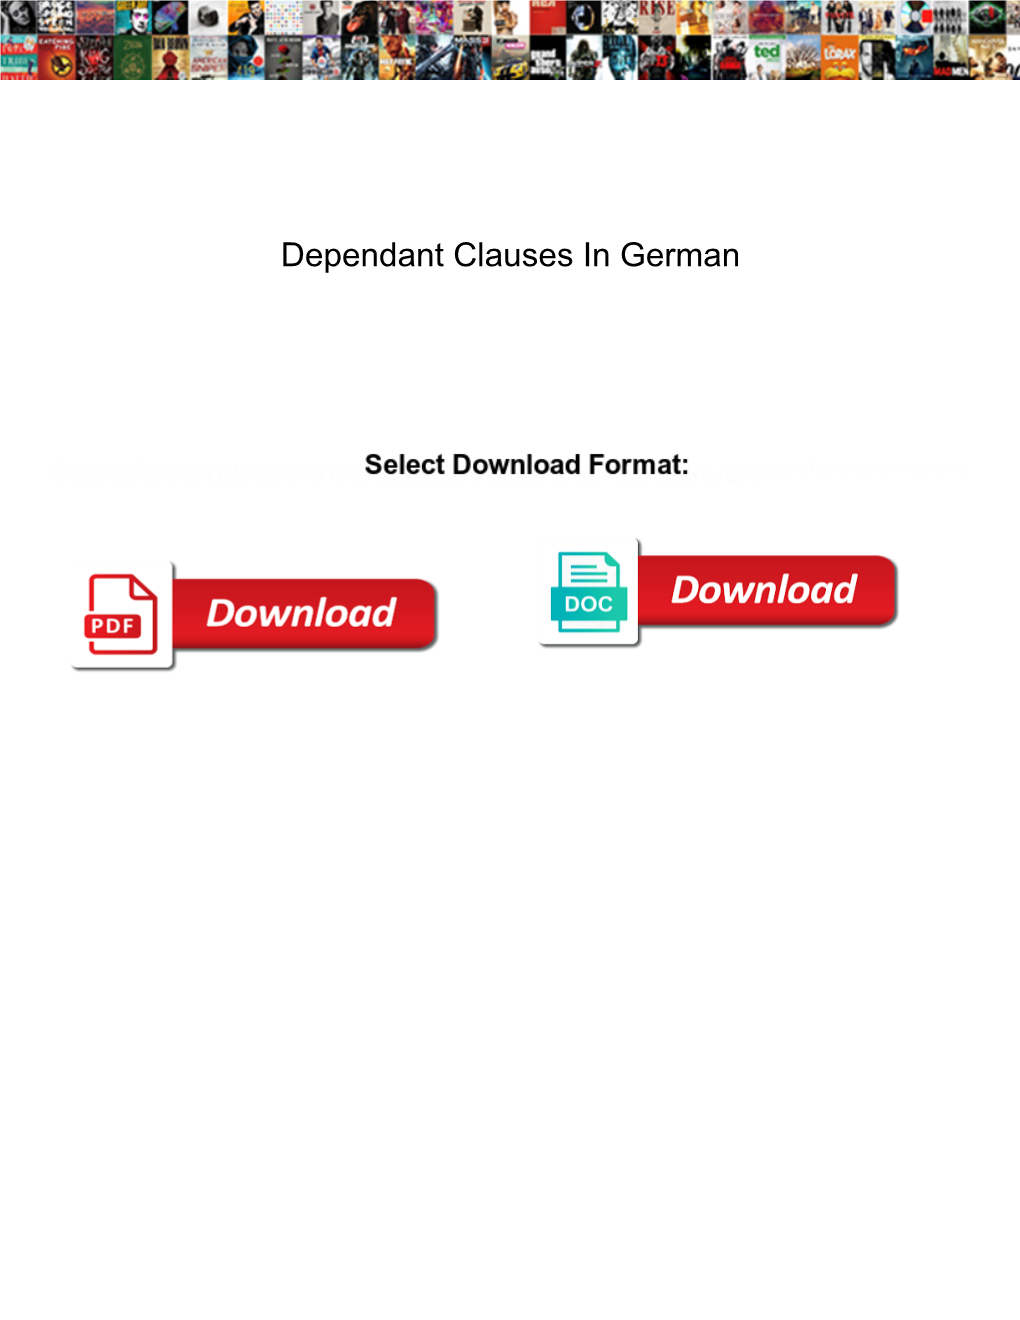 Dependant Clauses in German